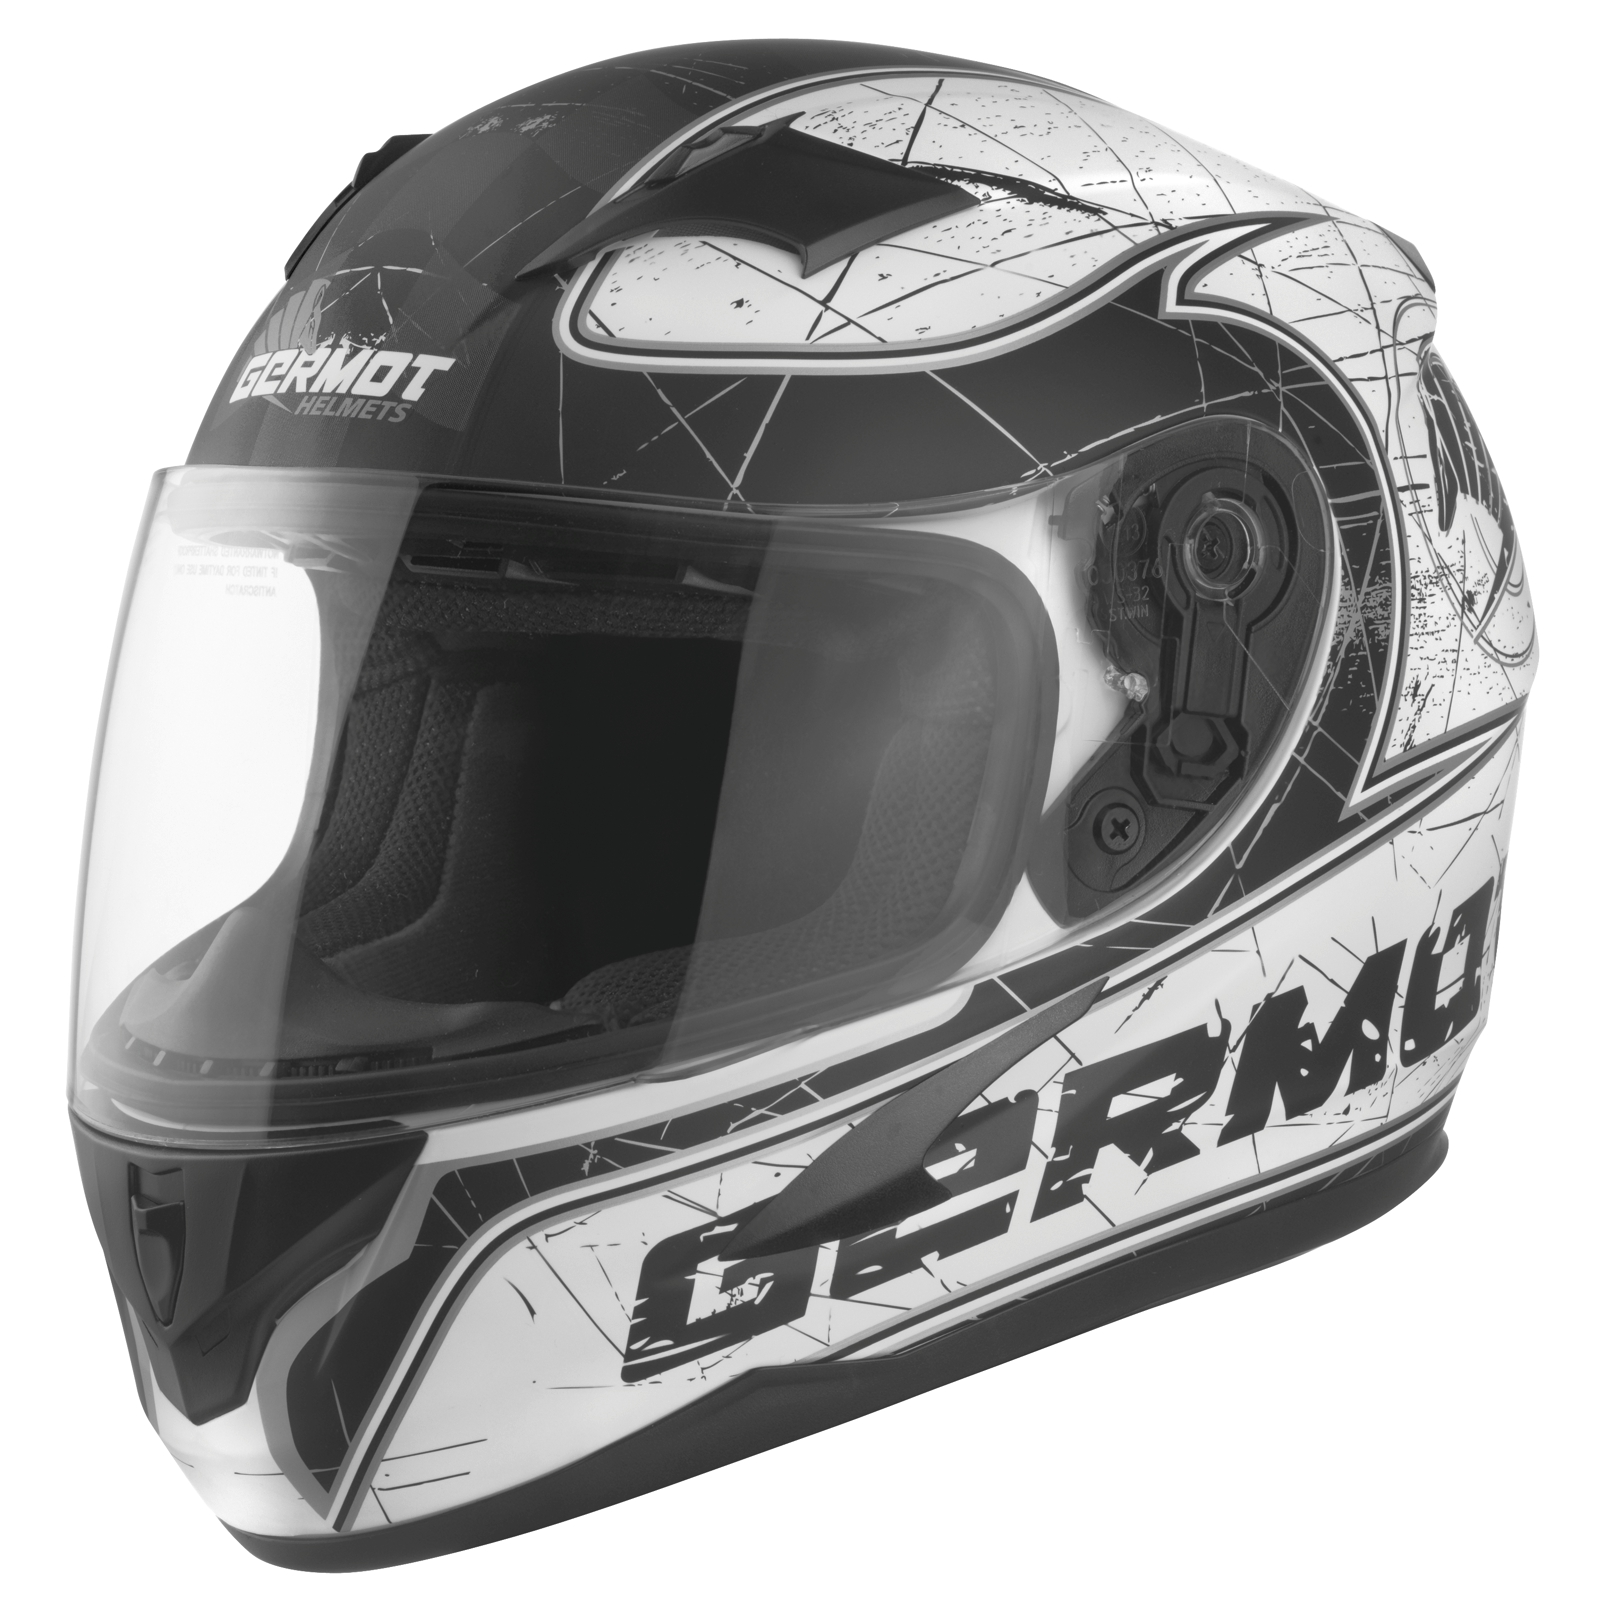 GERMOT Vertriebs GmbH - Germot Helm GM 420 matt-weiß/schwarz